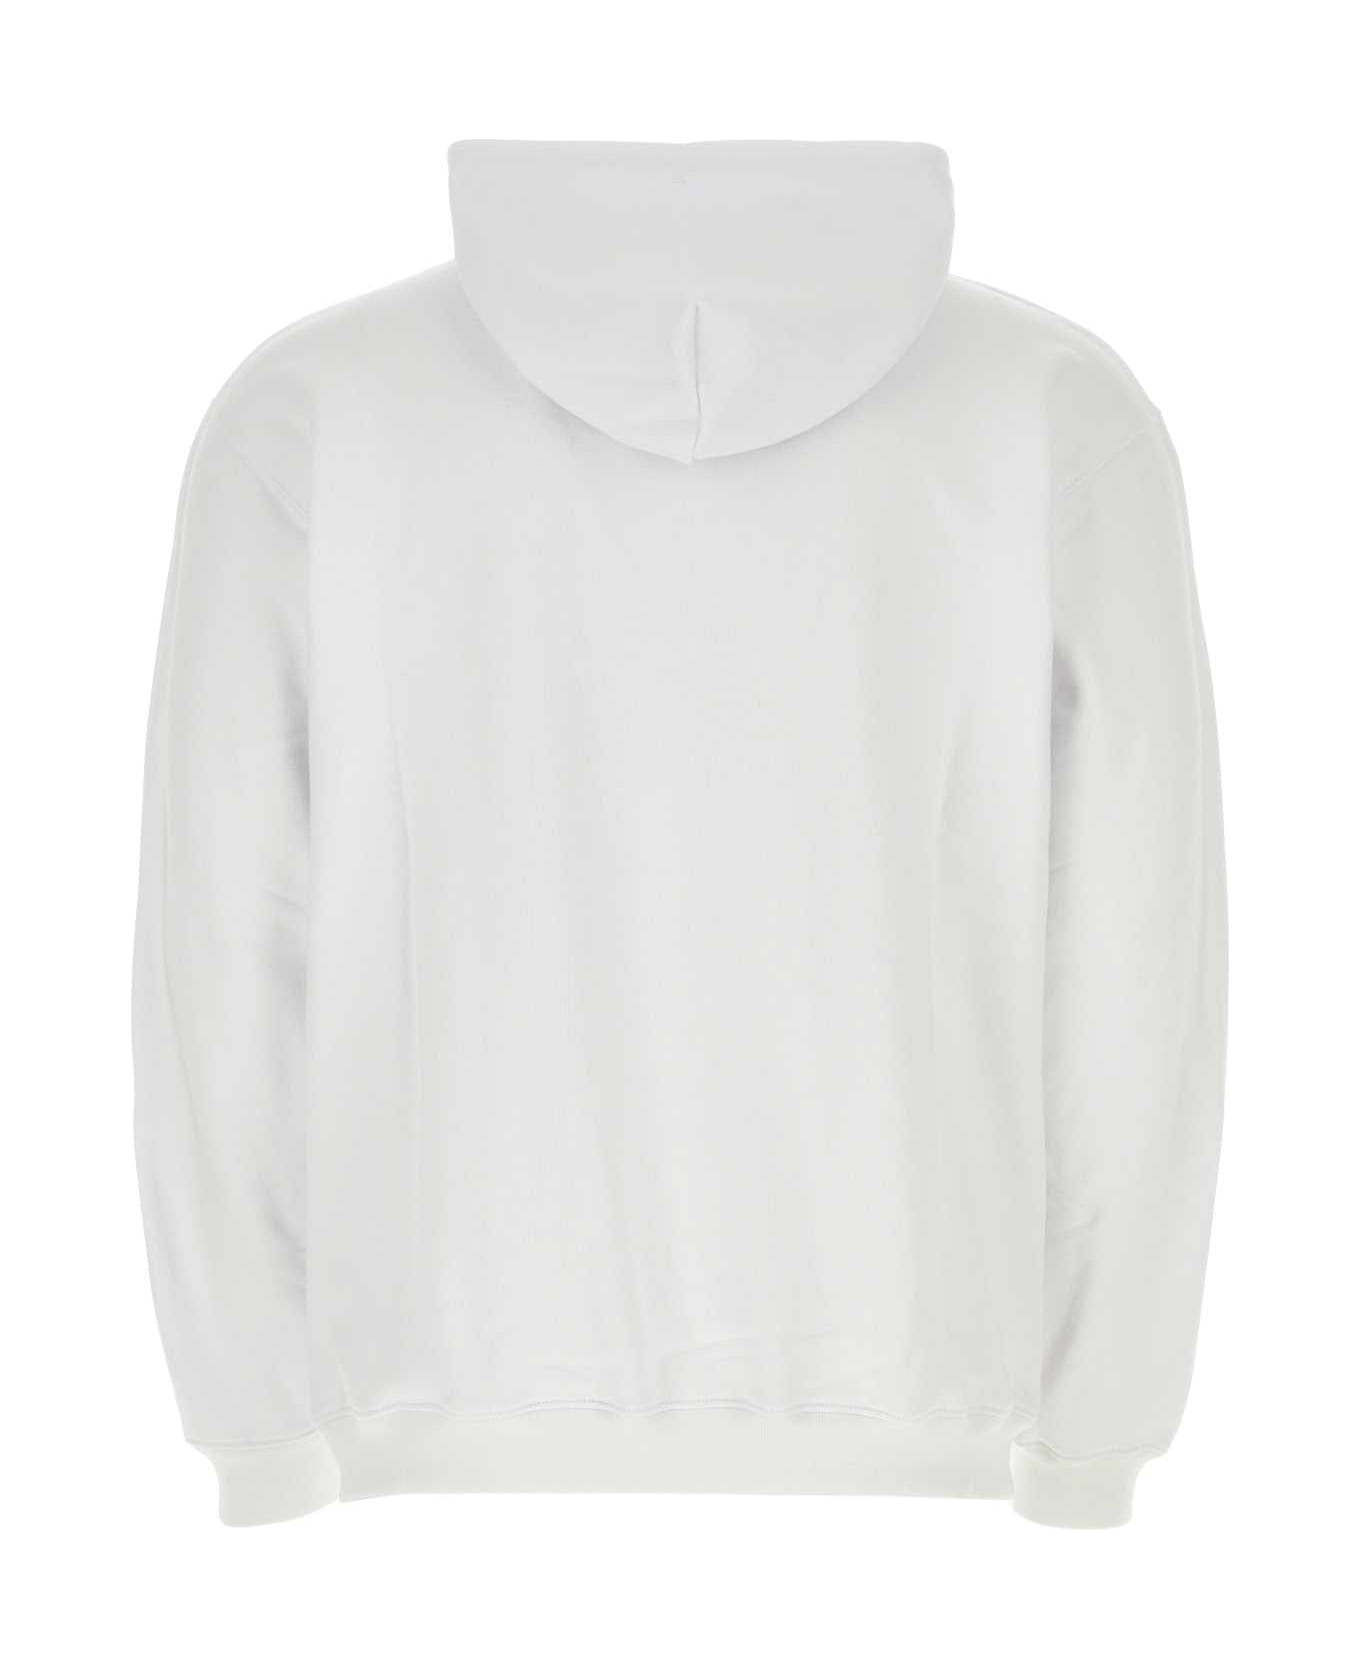 VTMNTS White Cotton Blend Oversize Sweatshirt - WHITE フリース